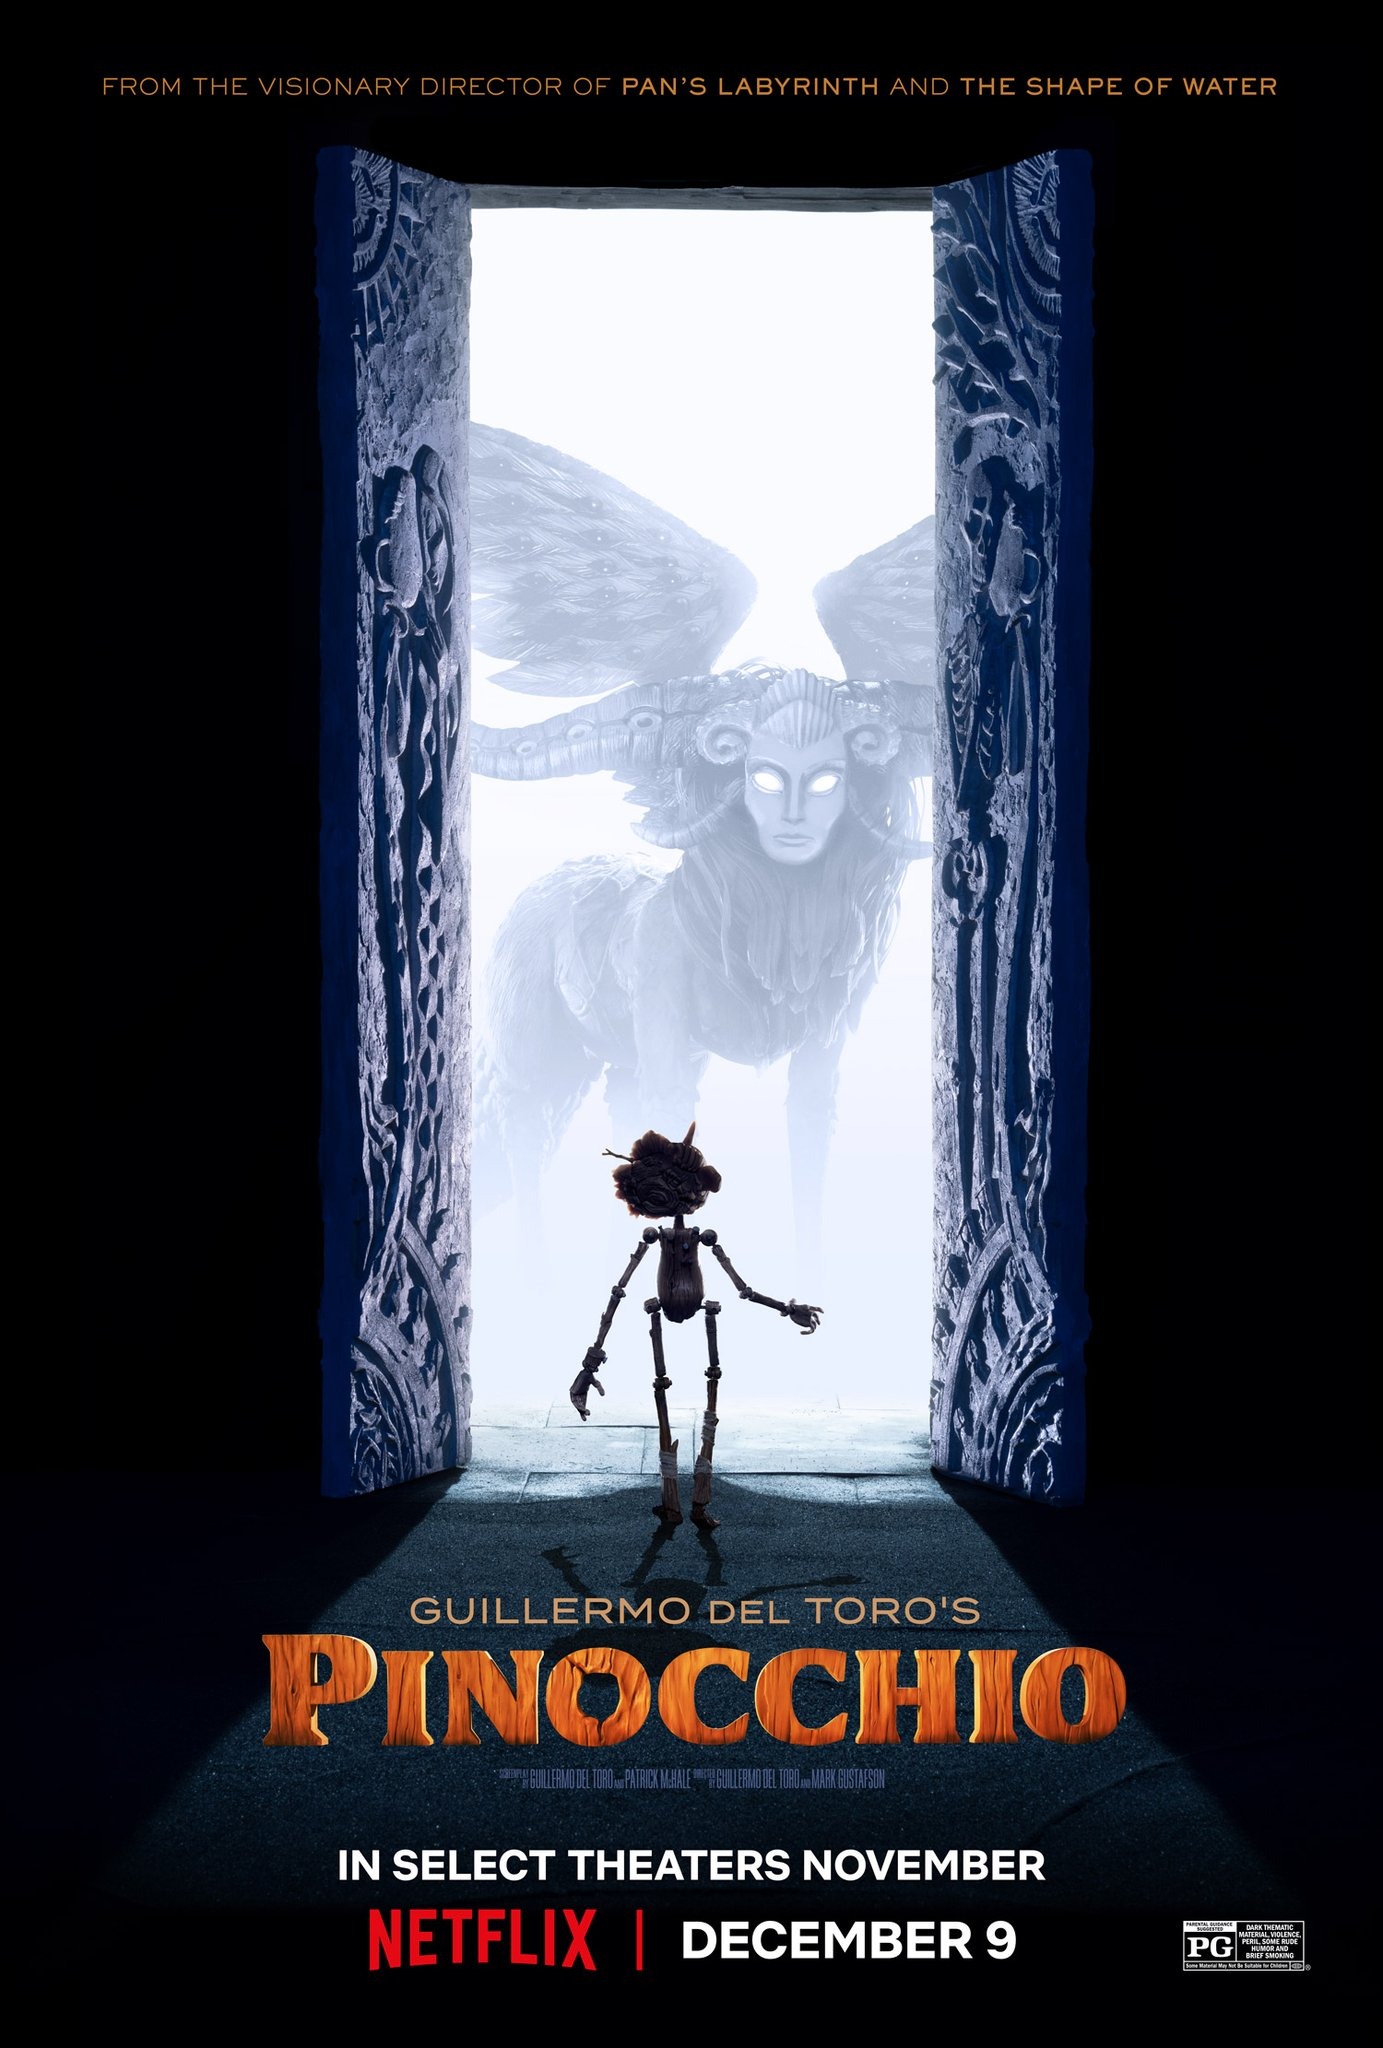 Mega Sized Movie Poster Image for Guillermo del Toro's Pinocchio (#2 of 3)